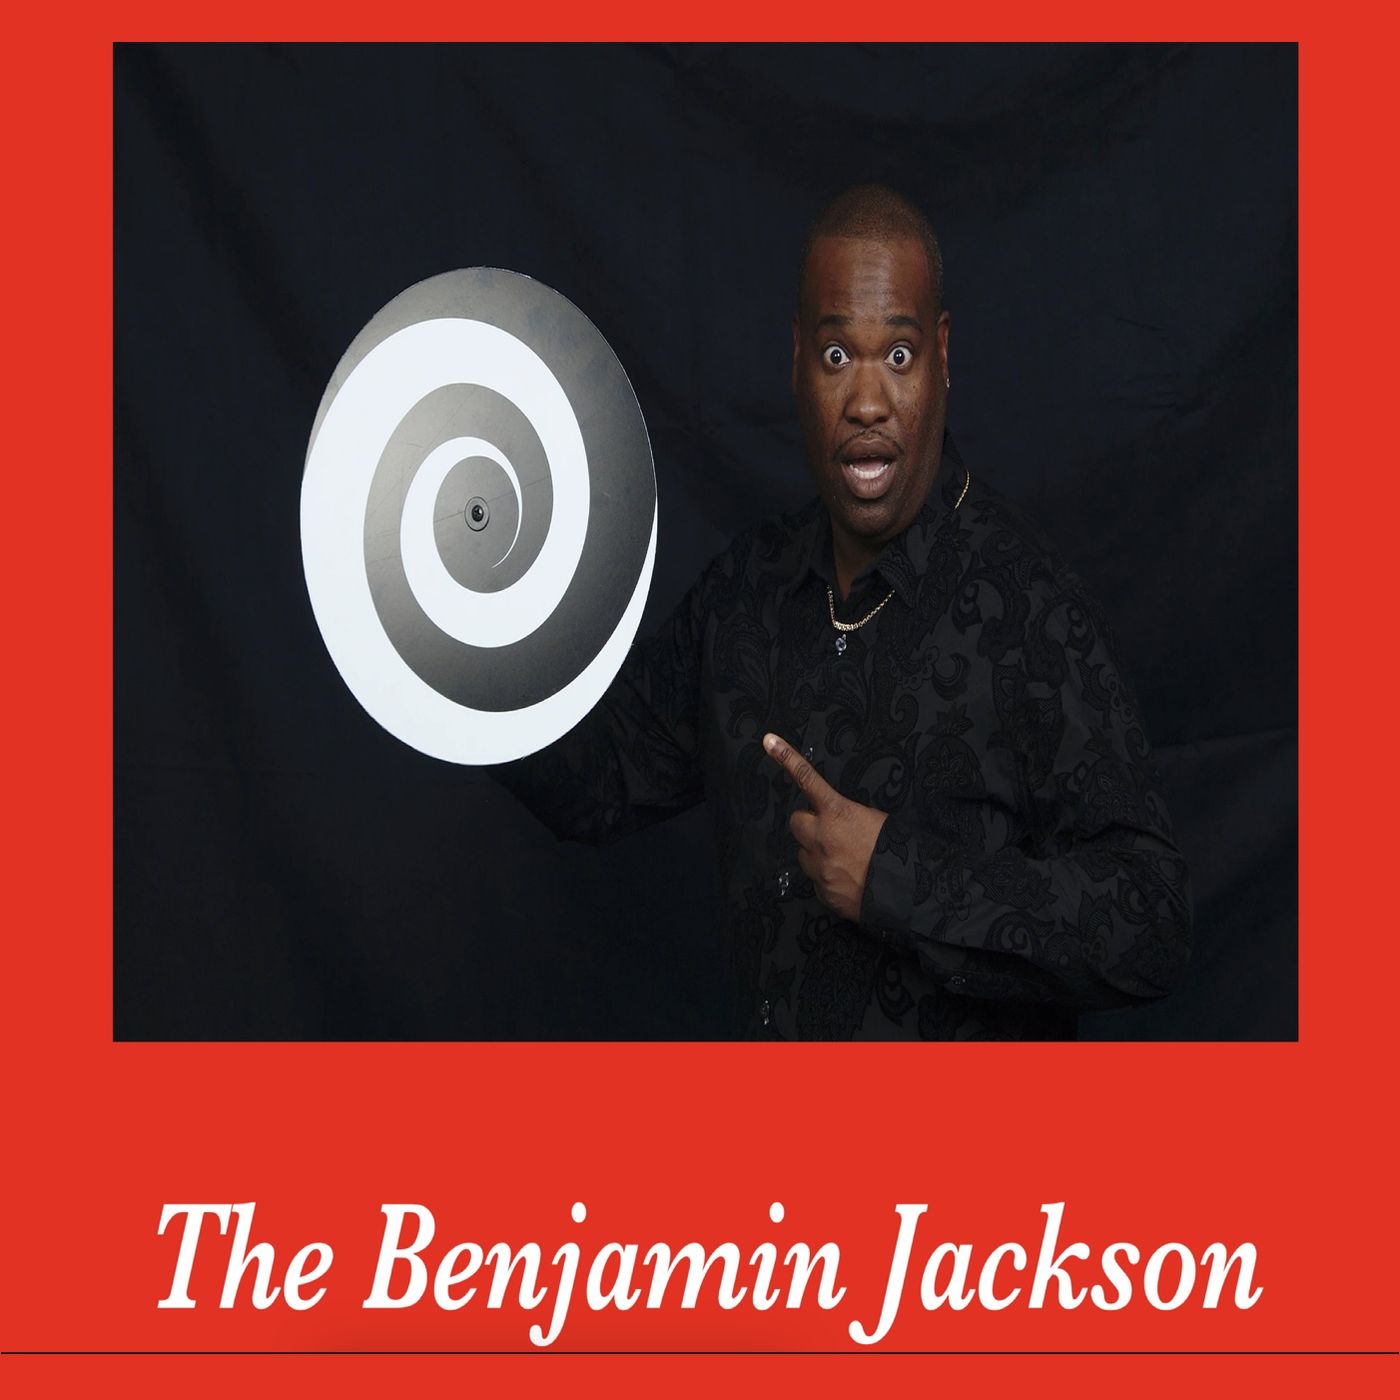 Benjamin Jackson, Hypnotist interview by Countyfairgrounds